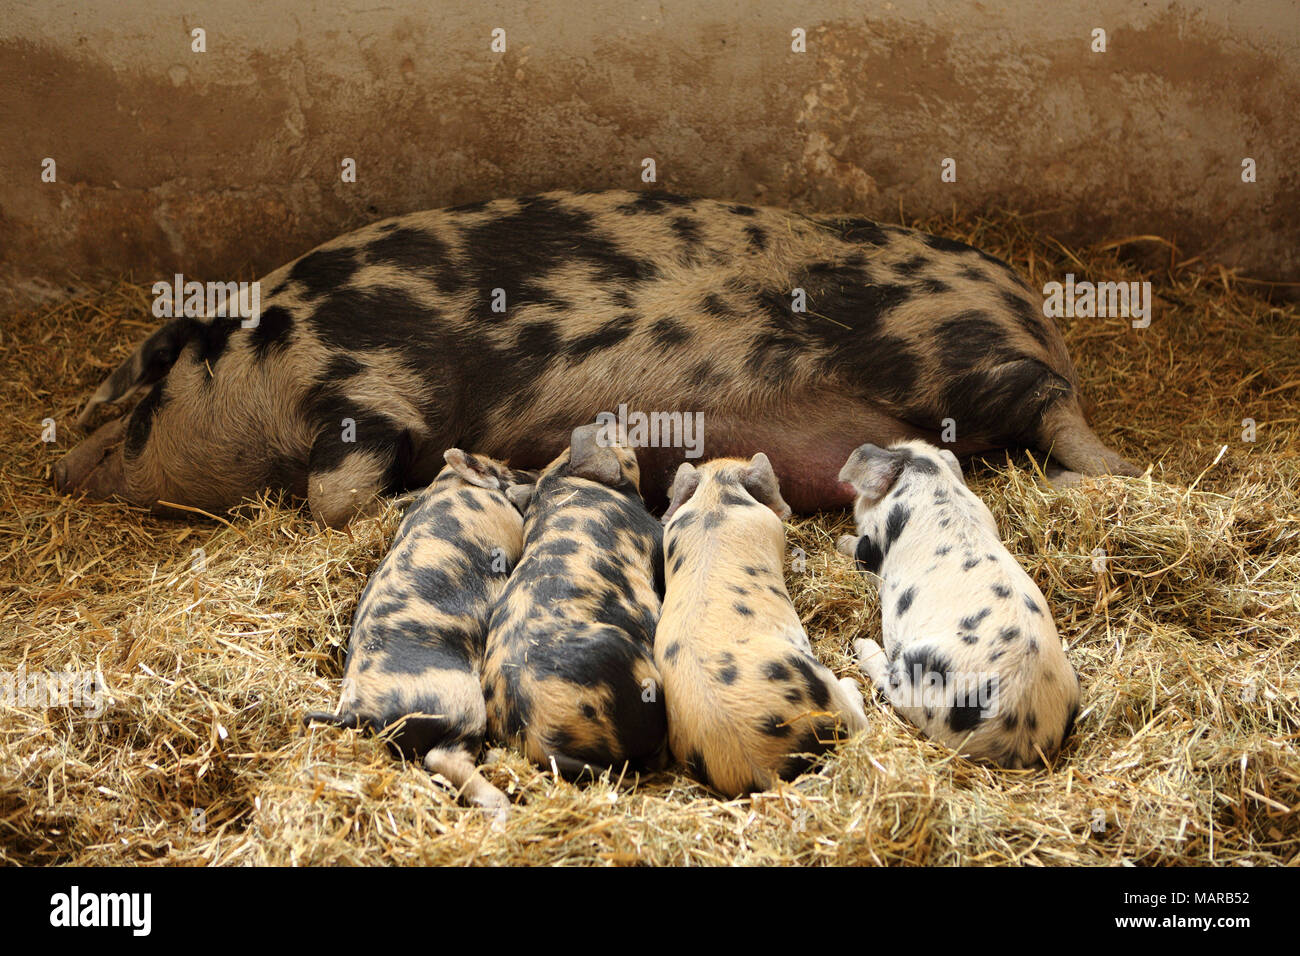 Domestic Pig, Turopolje x ?. Sow suckling piglets (6 weeks old). Germany Stock Photo